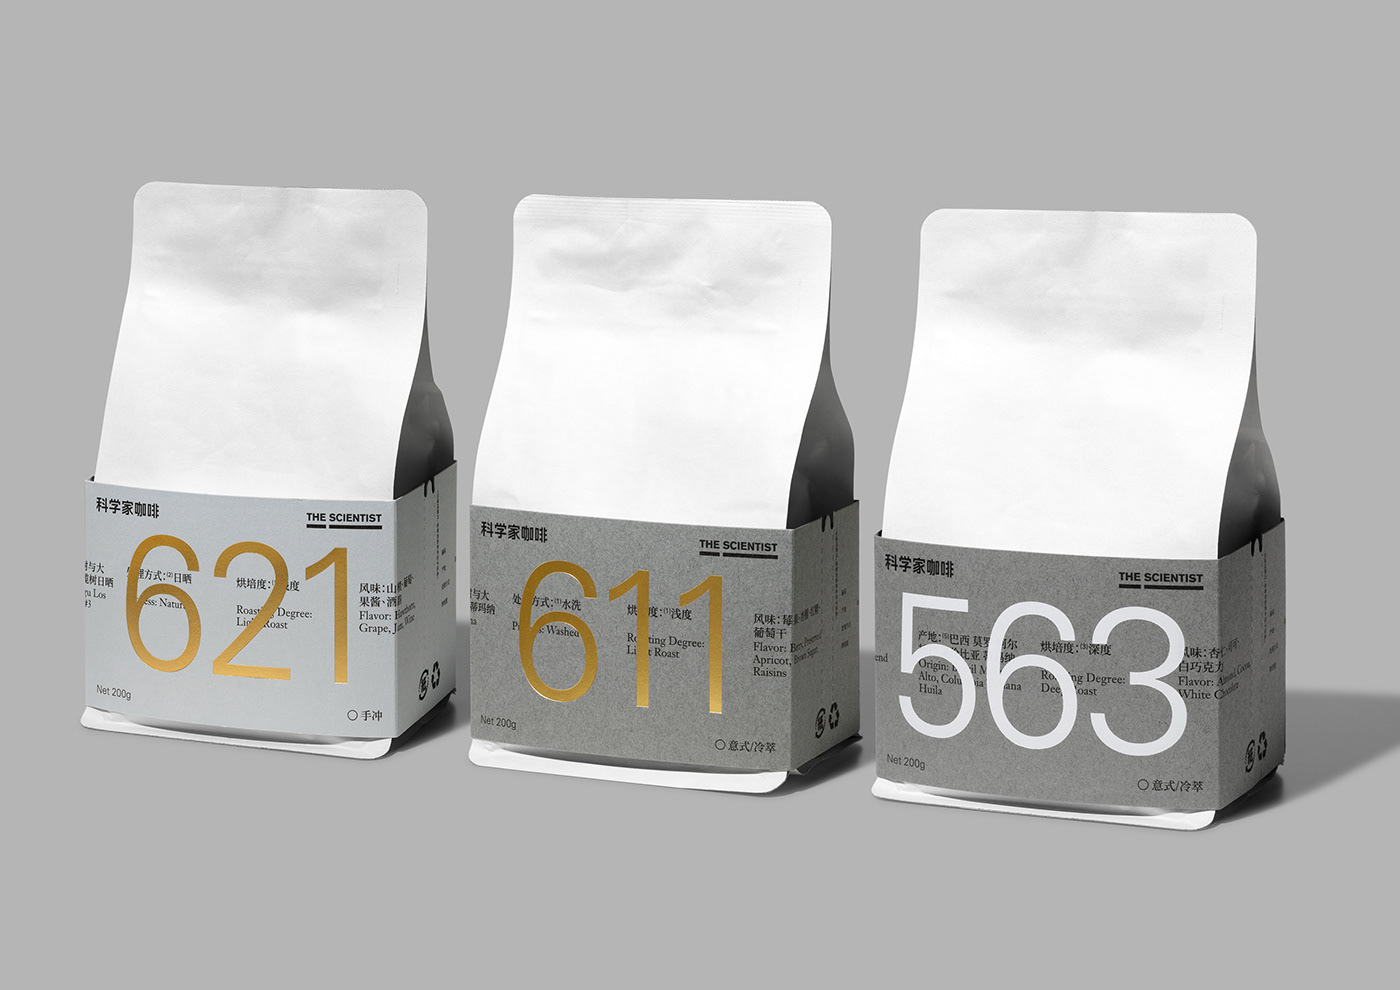 Packaging example #378: T.S's Coffee Bean Packaging ????????